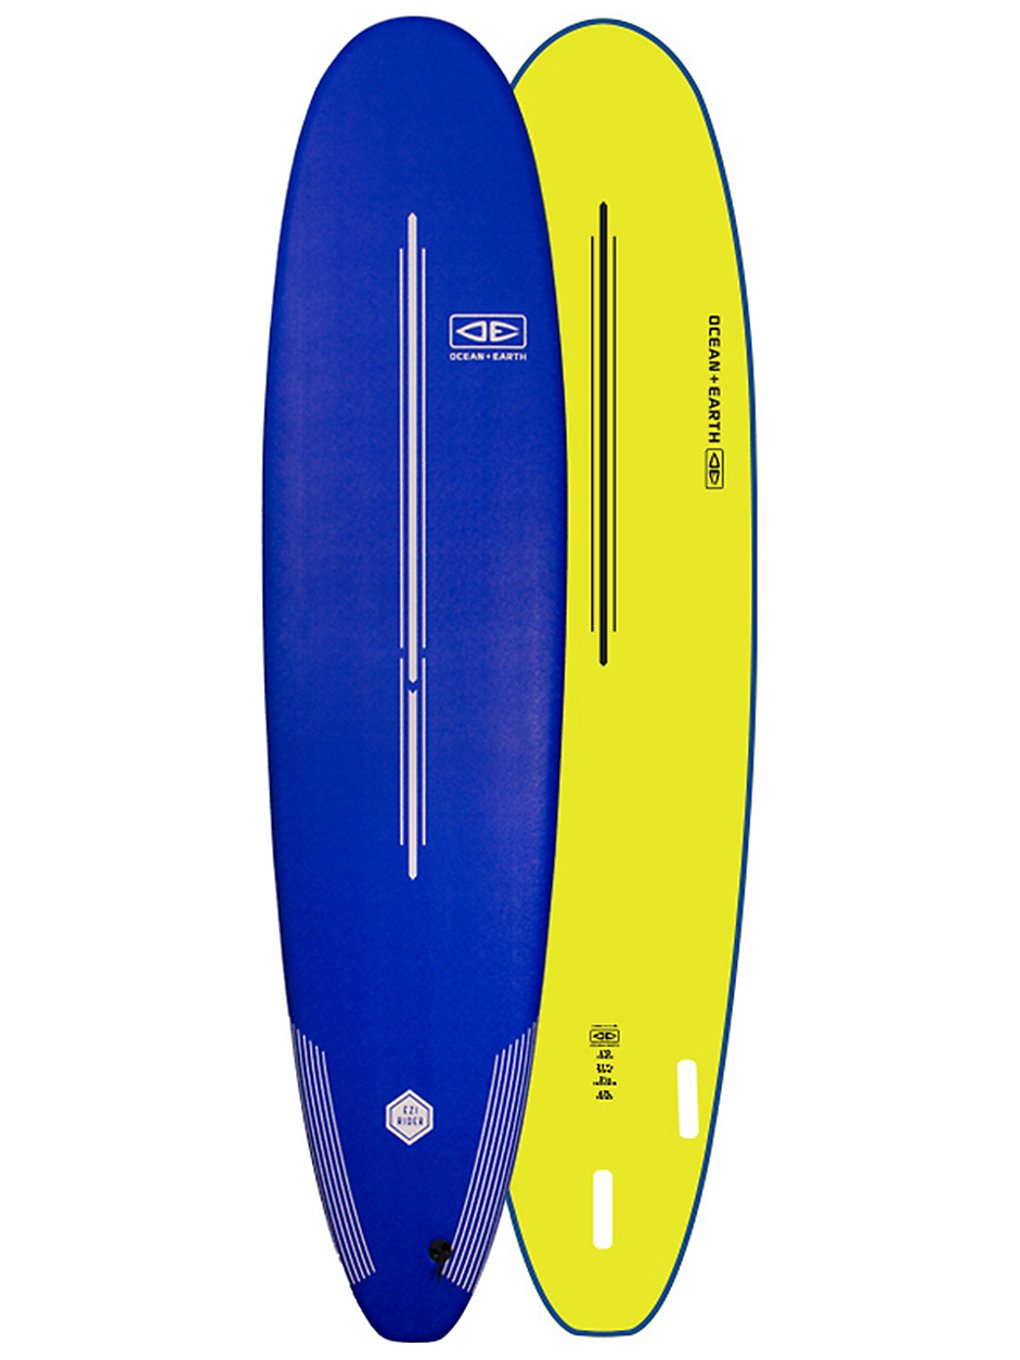 Ocean & Earth Ezi Rider 8'0 Surfboard navy